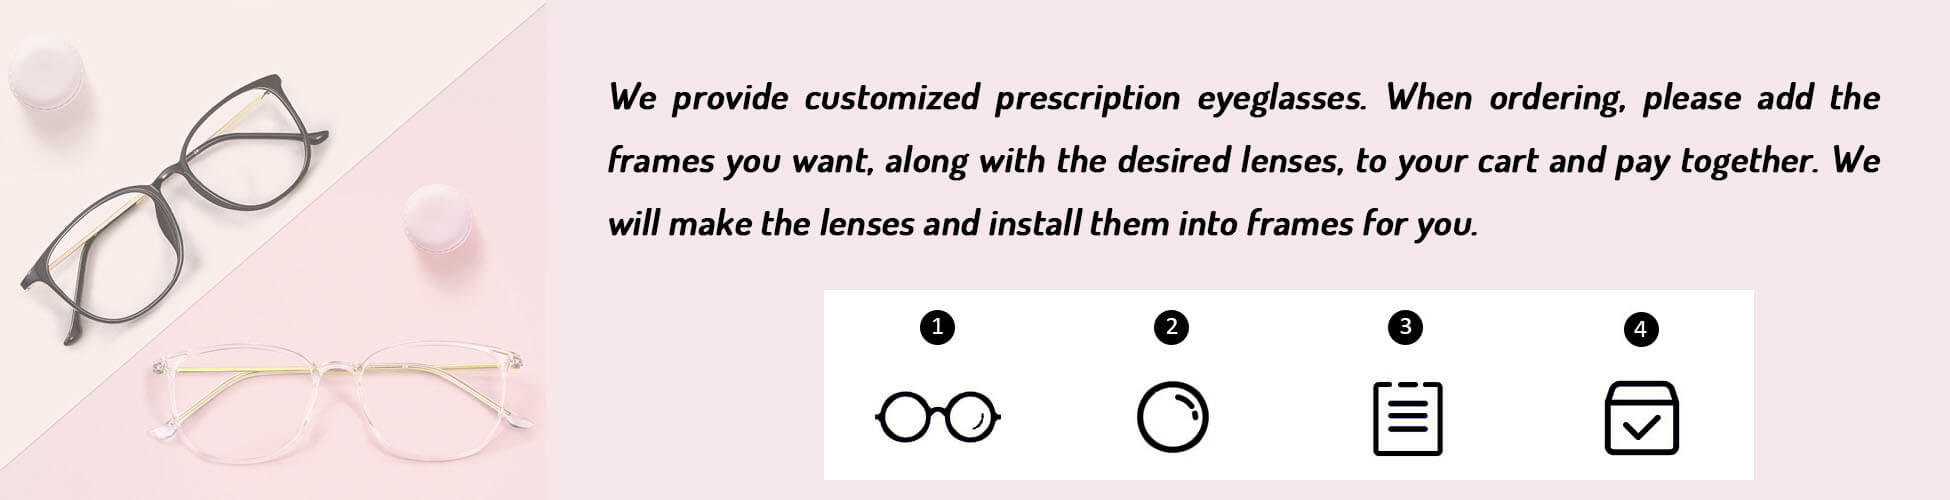 how-to-order-prescription-glasses